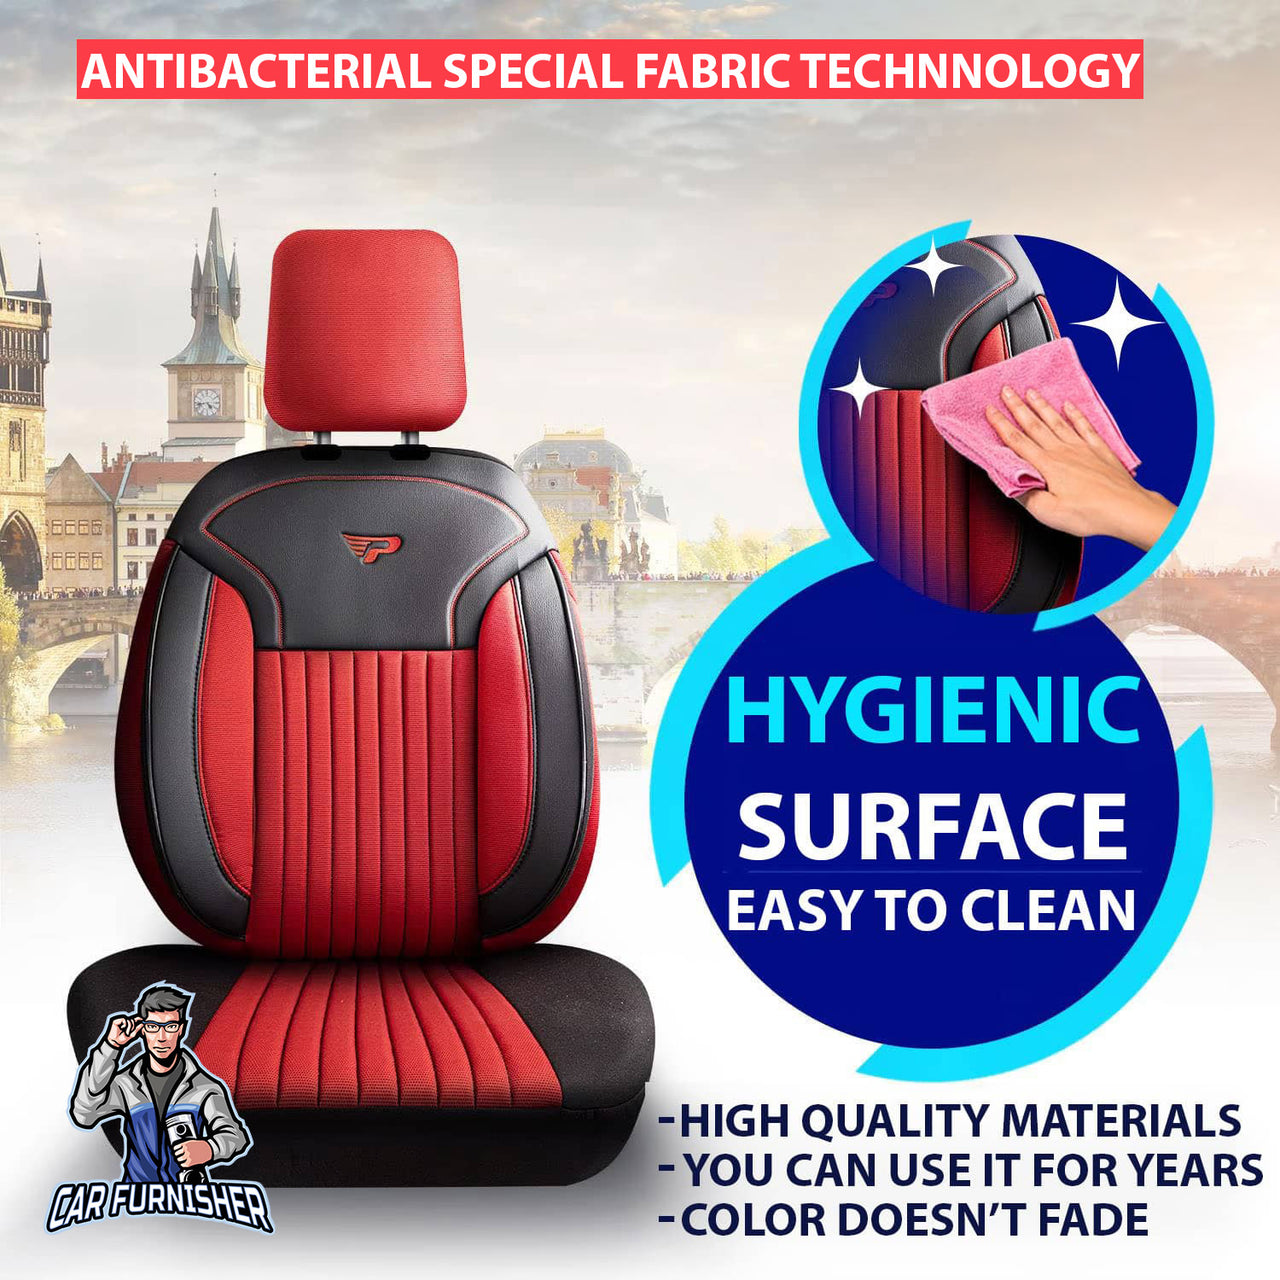 Car Seat Cover Set - Prague Design Red 5 Seats + Headrests (Full Set) Leather & Pique Fabric